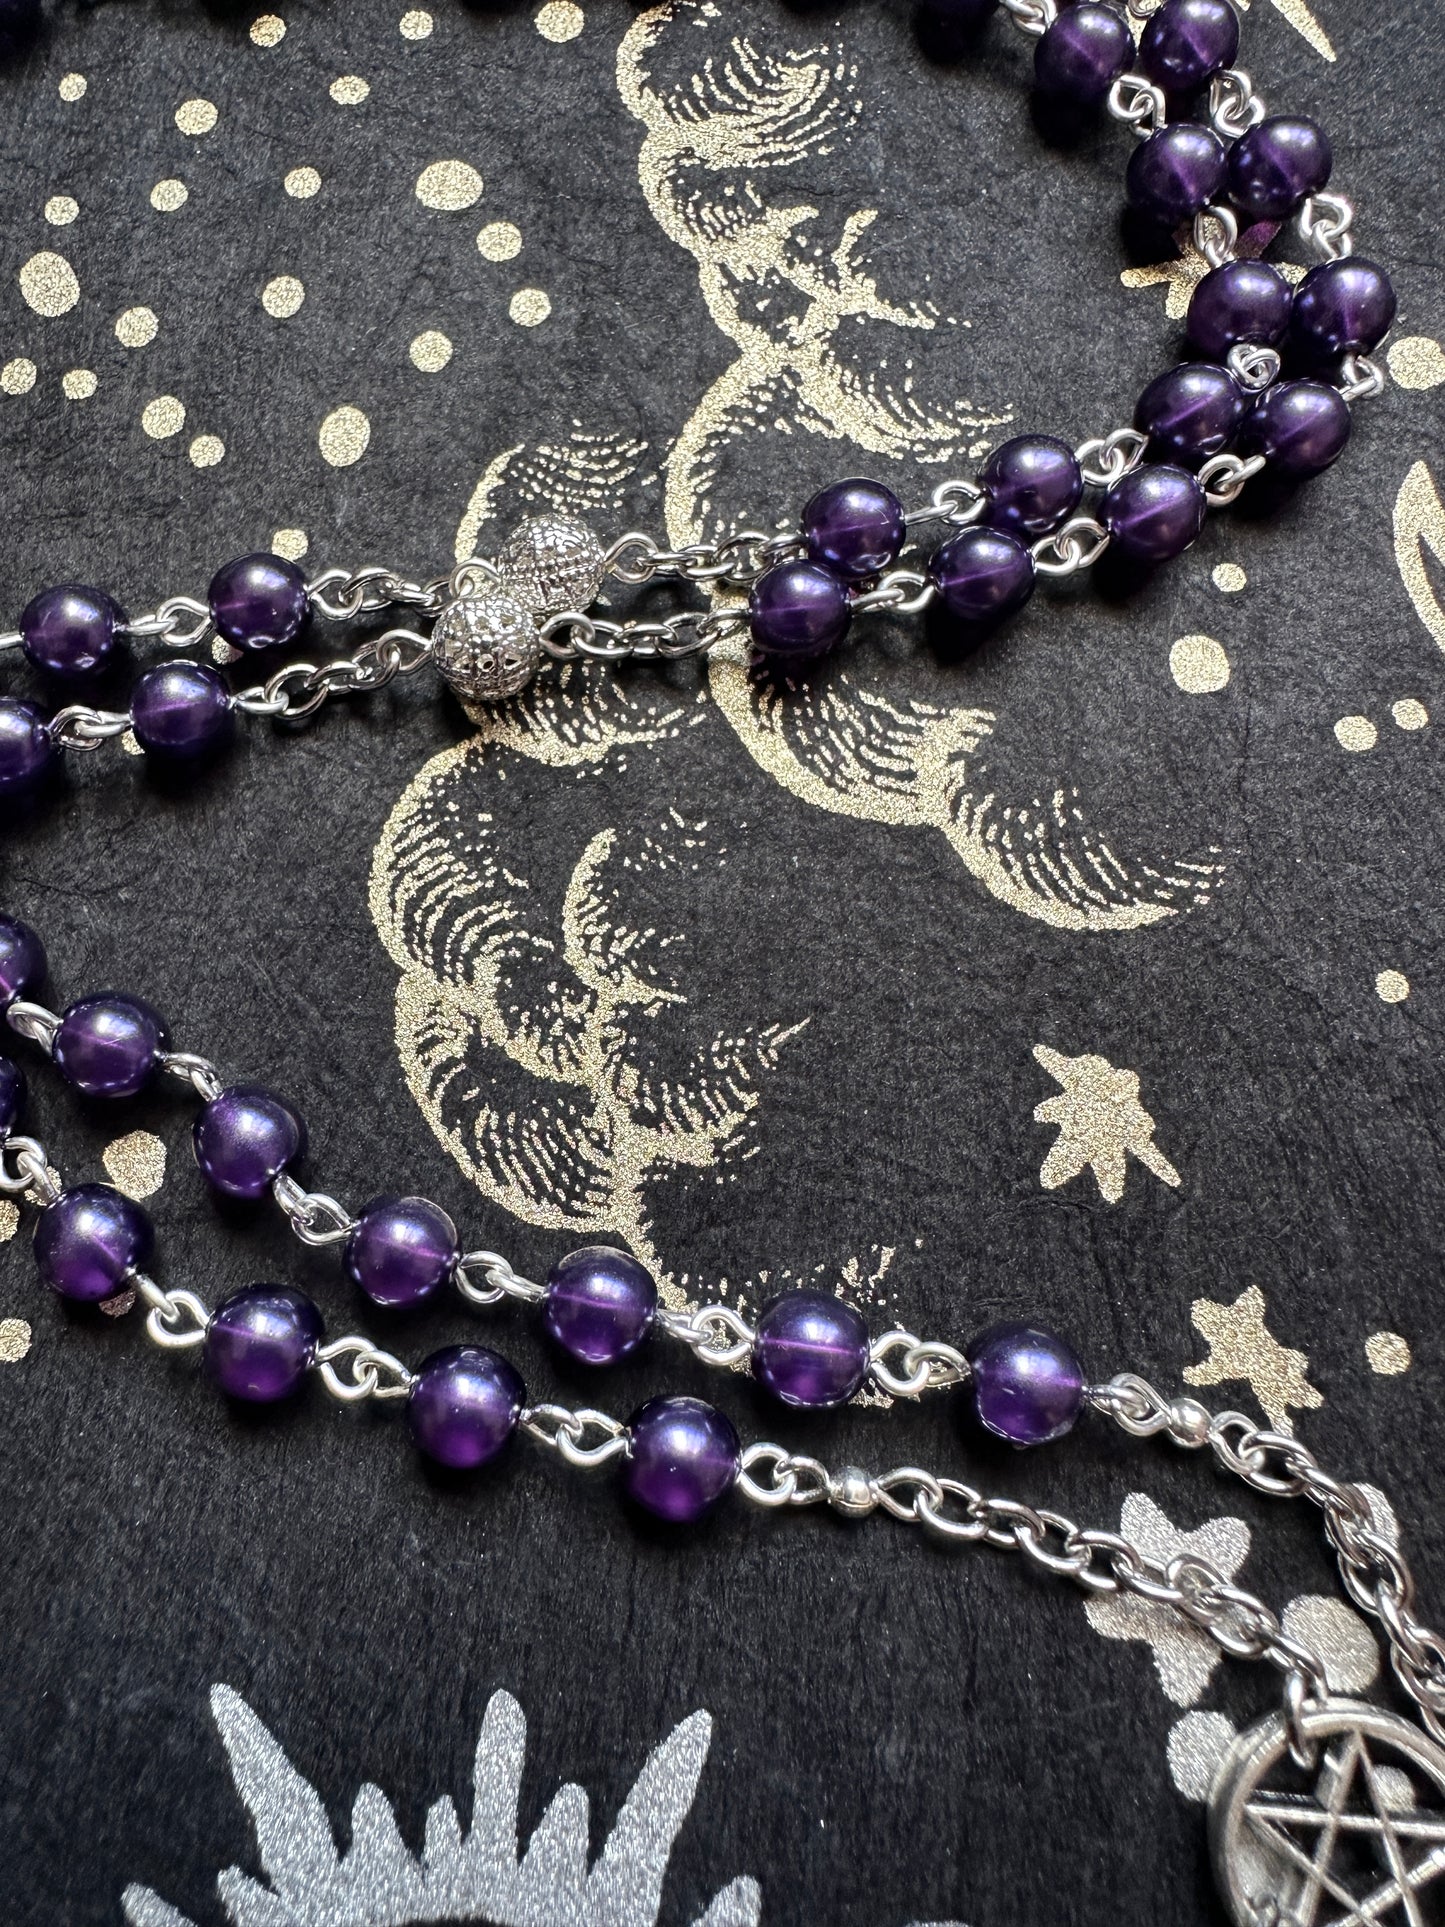 Purple Lucifer sigil rosary